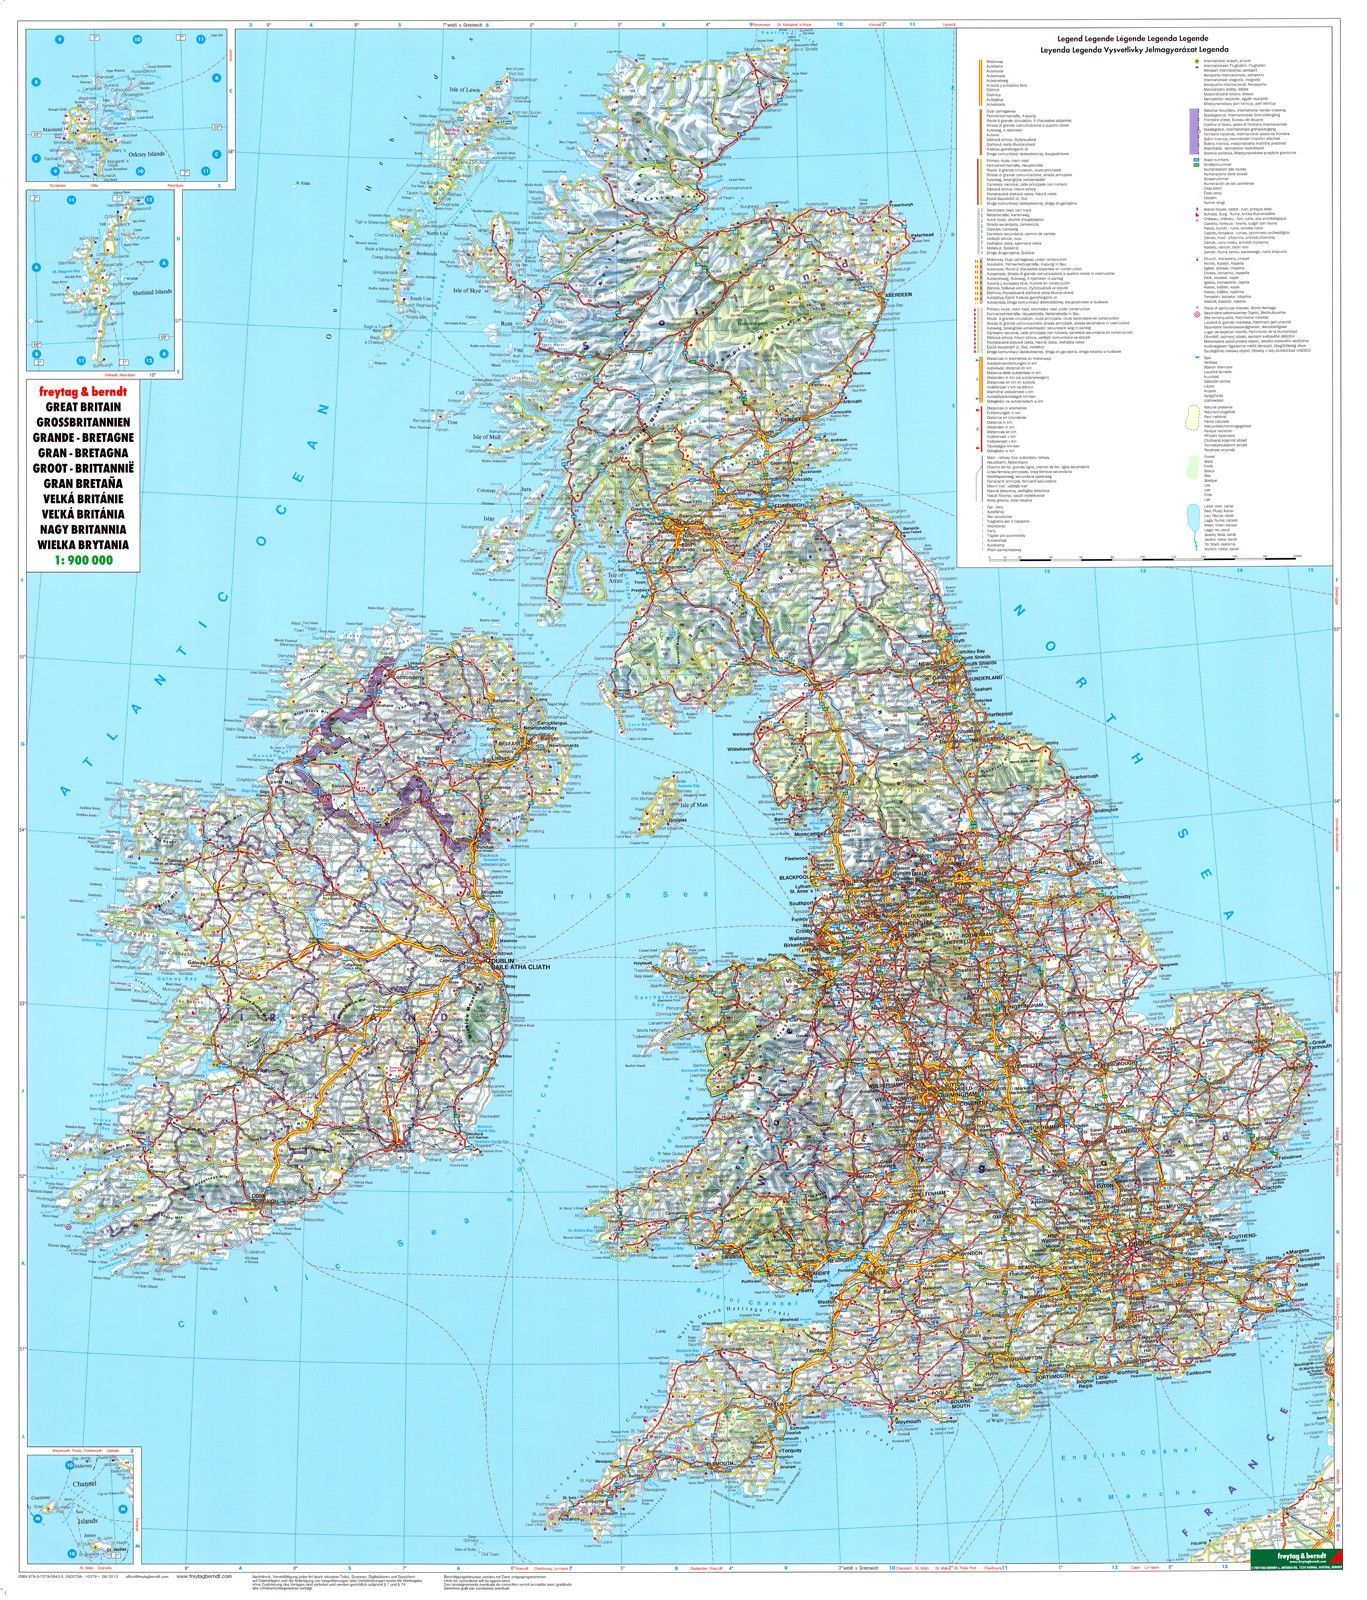 Koop Landkaart Groot 1:900.000 met plaatsnamenregister voordelig online COMMEE